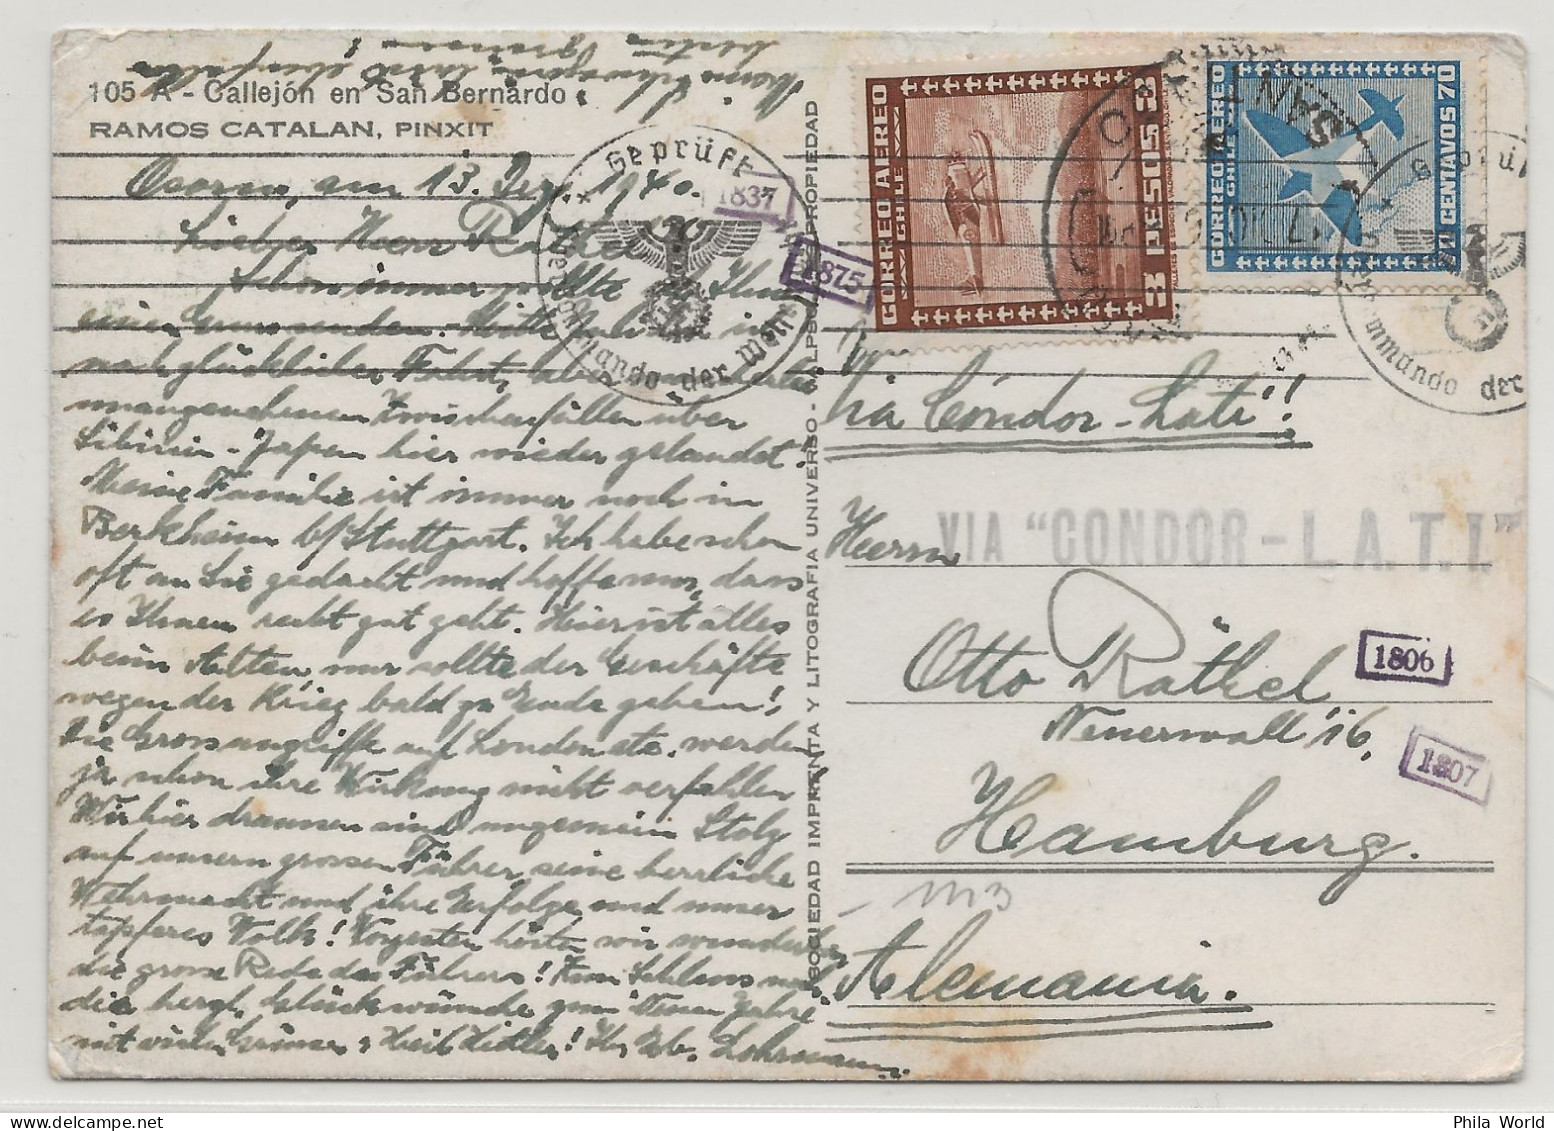 LATI 1940 Air Mail Postcard CHILE CHILI CONDOR LATI GERMANY Hamburg Gepruft Censorship OKW Sur CP RAMOS CATALAN PINXIT - Cile